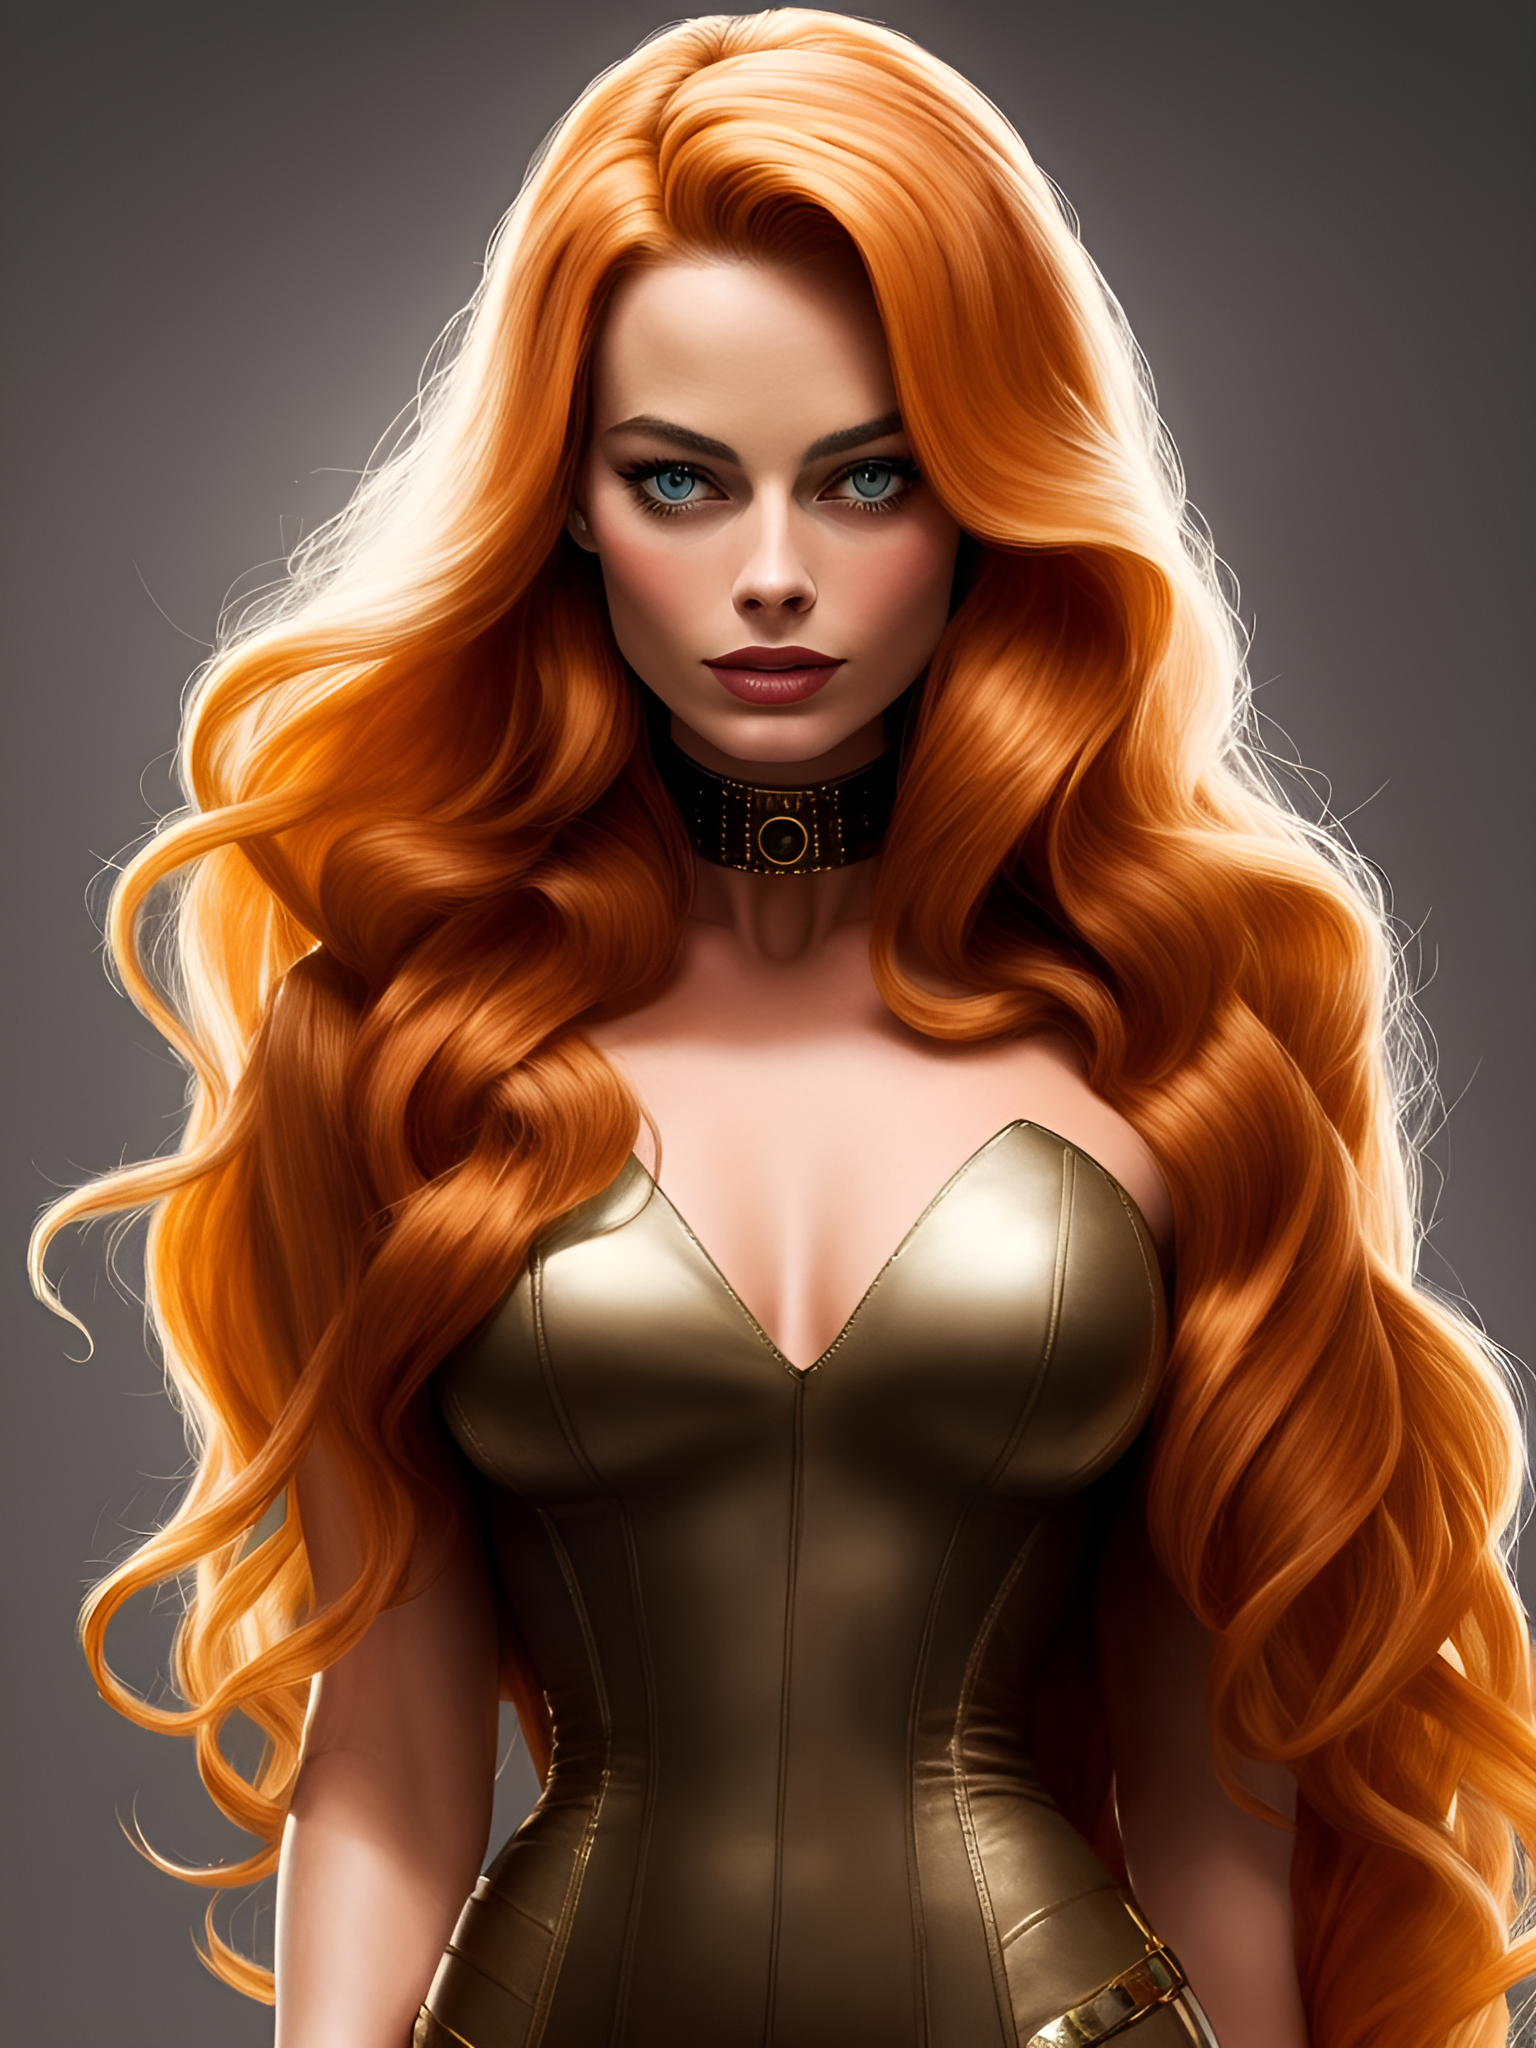 General 1536x2048 Margot Robbie AI art portrait display long hair women looking at viewer simple background choker redhead Golden Clothing blue eyes